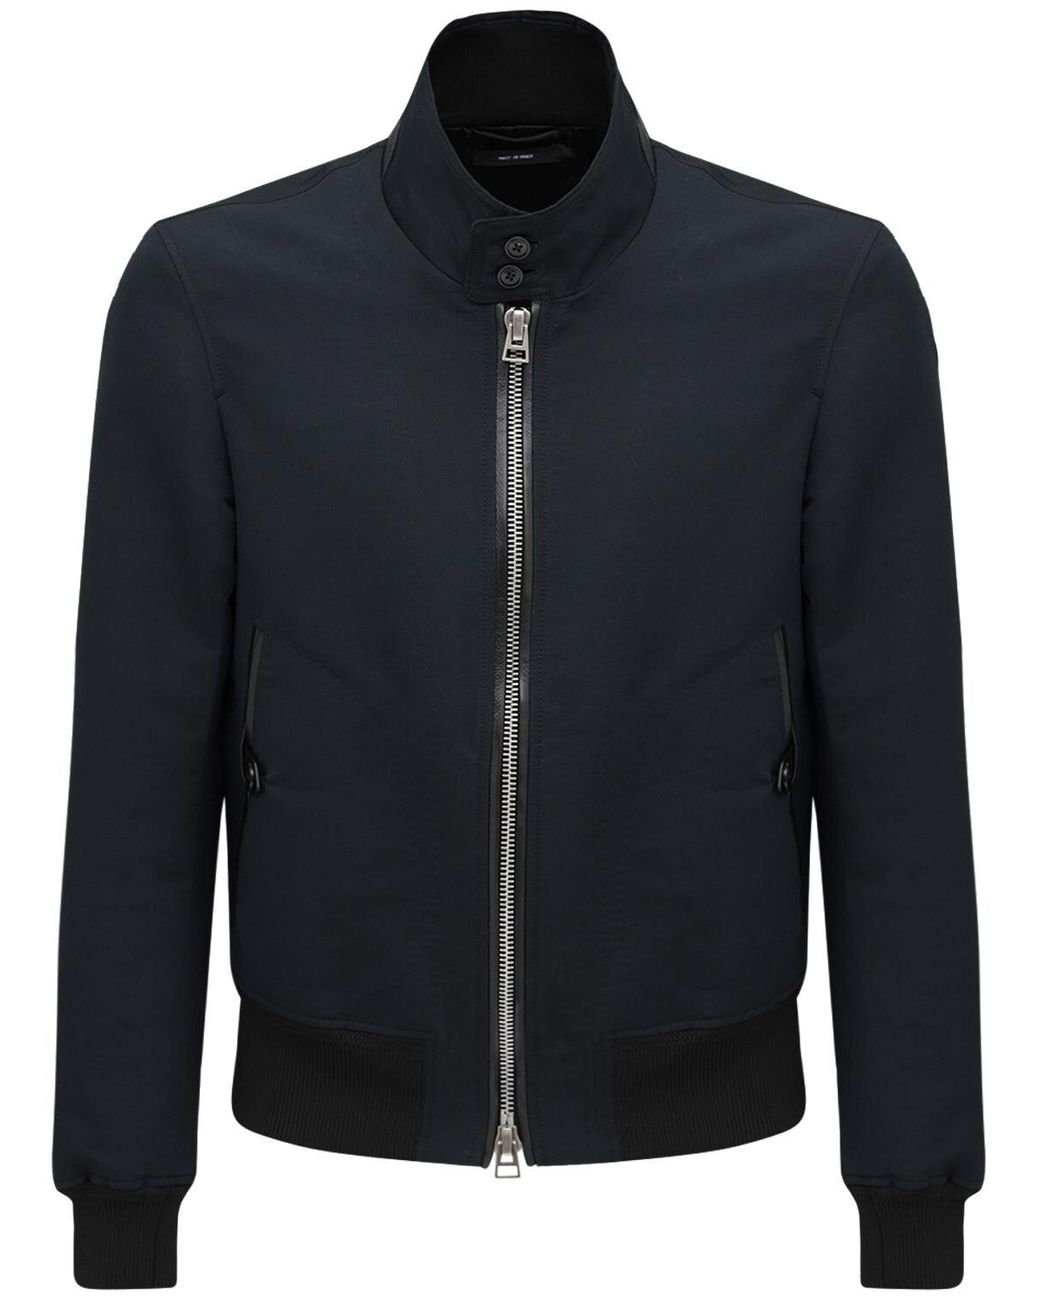 Tom Ford Harrington Cotton & Silk Shirt Jacket in Black for Men - Lyst